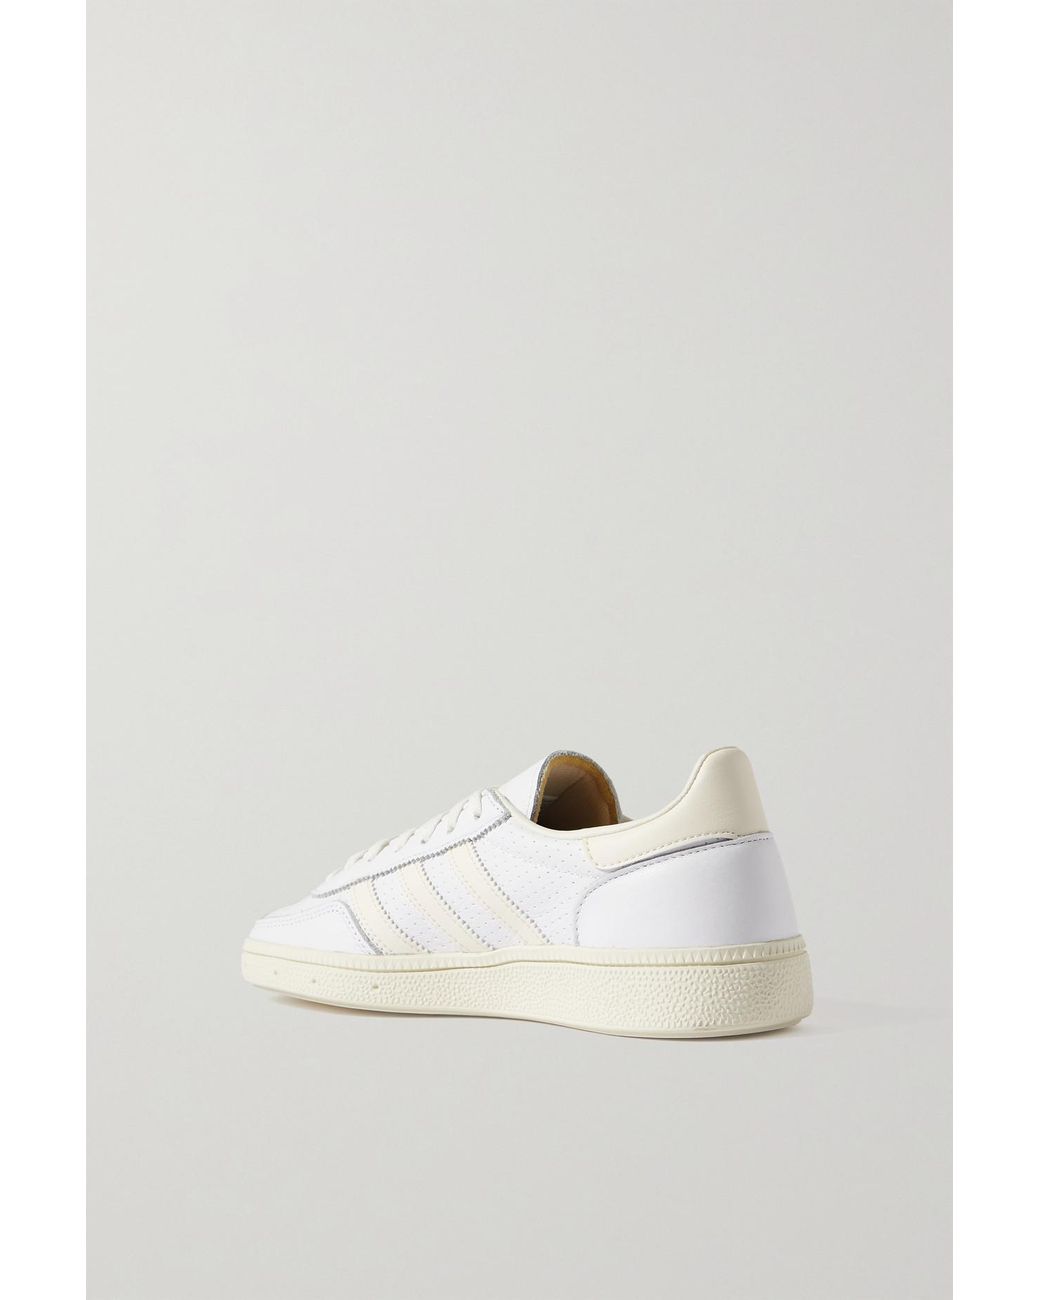 adidas Originals Handball Spezial Leather Sneakers in White | Lyst